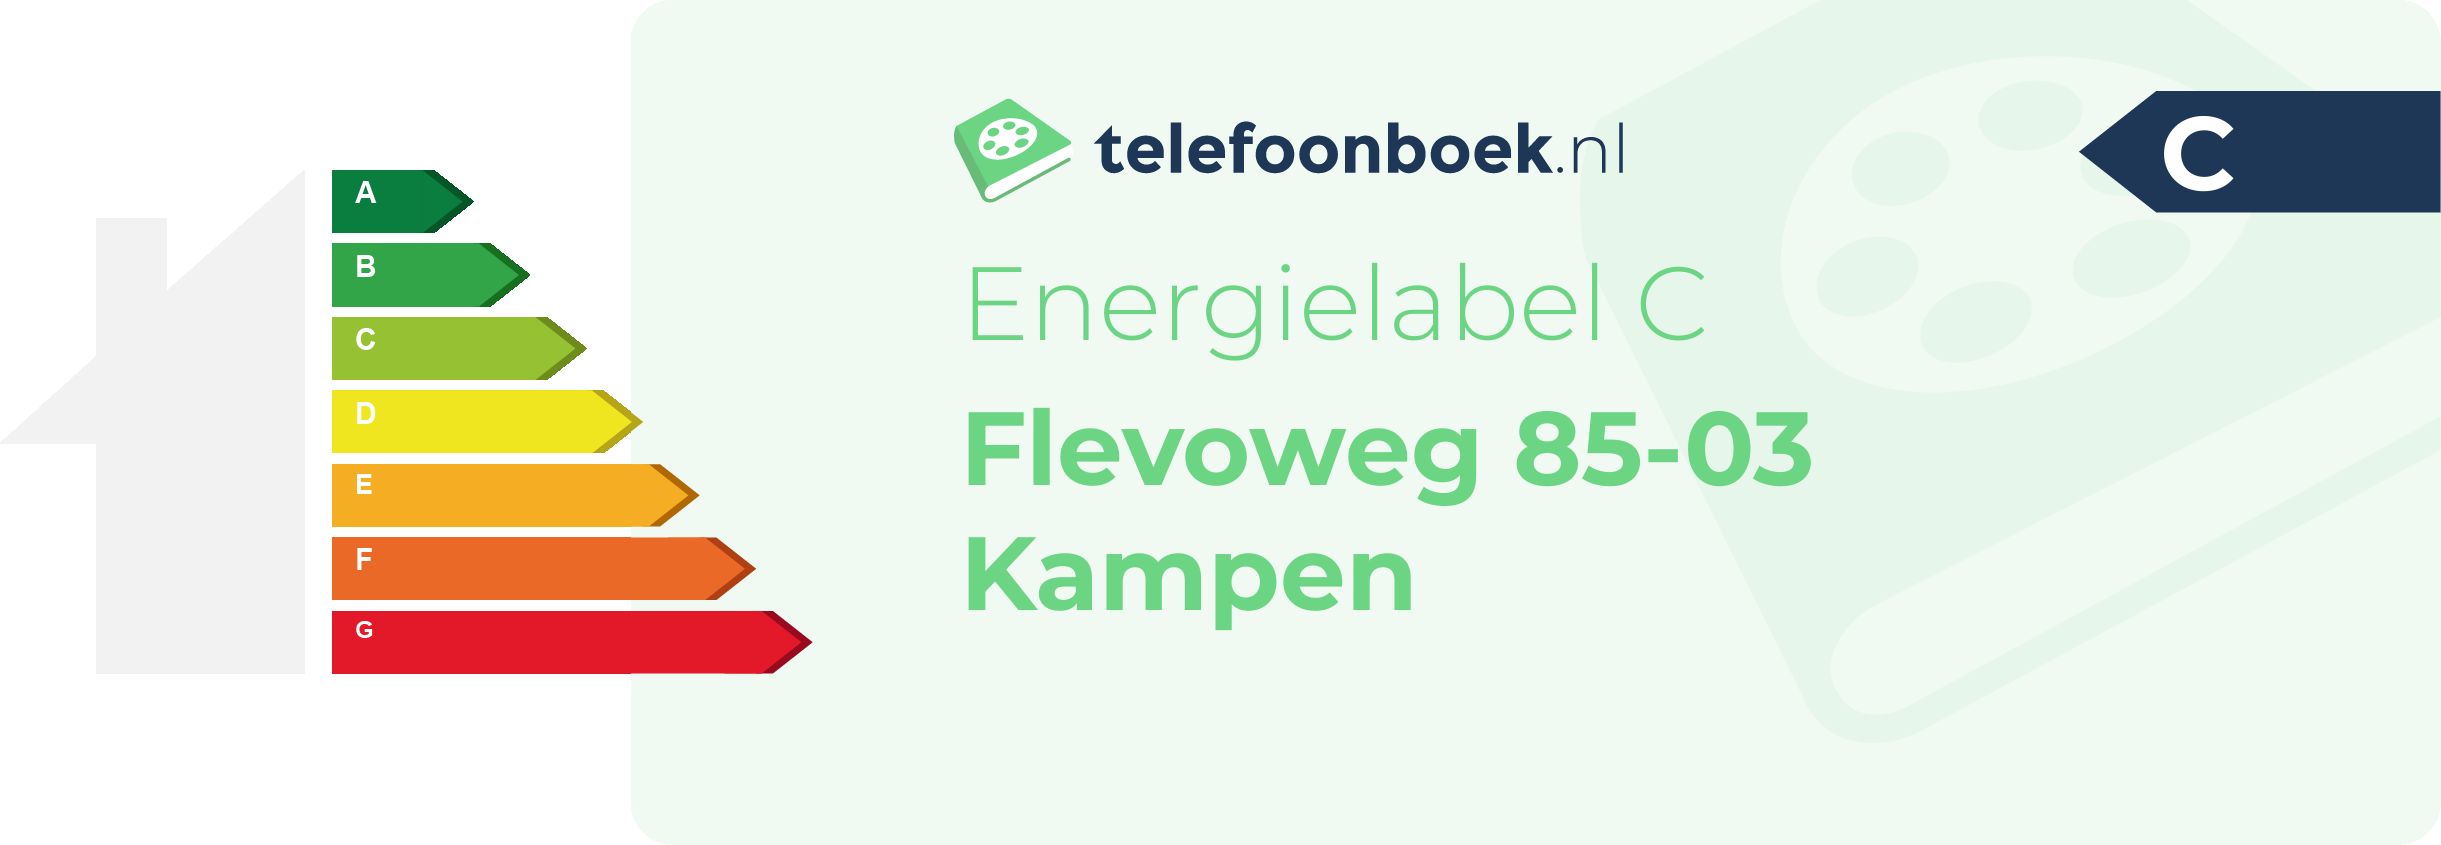 Energielabel Flevoweg 85-03 Kampen